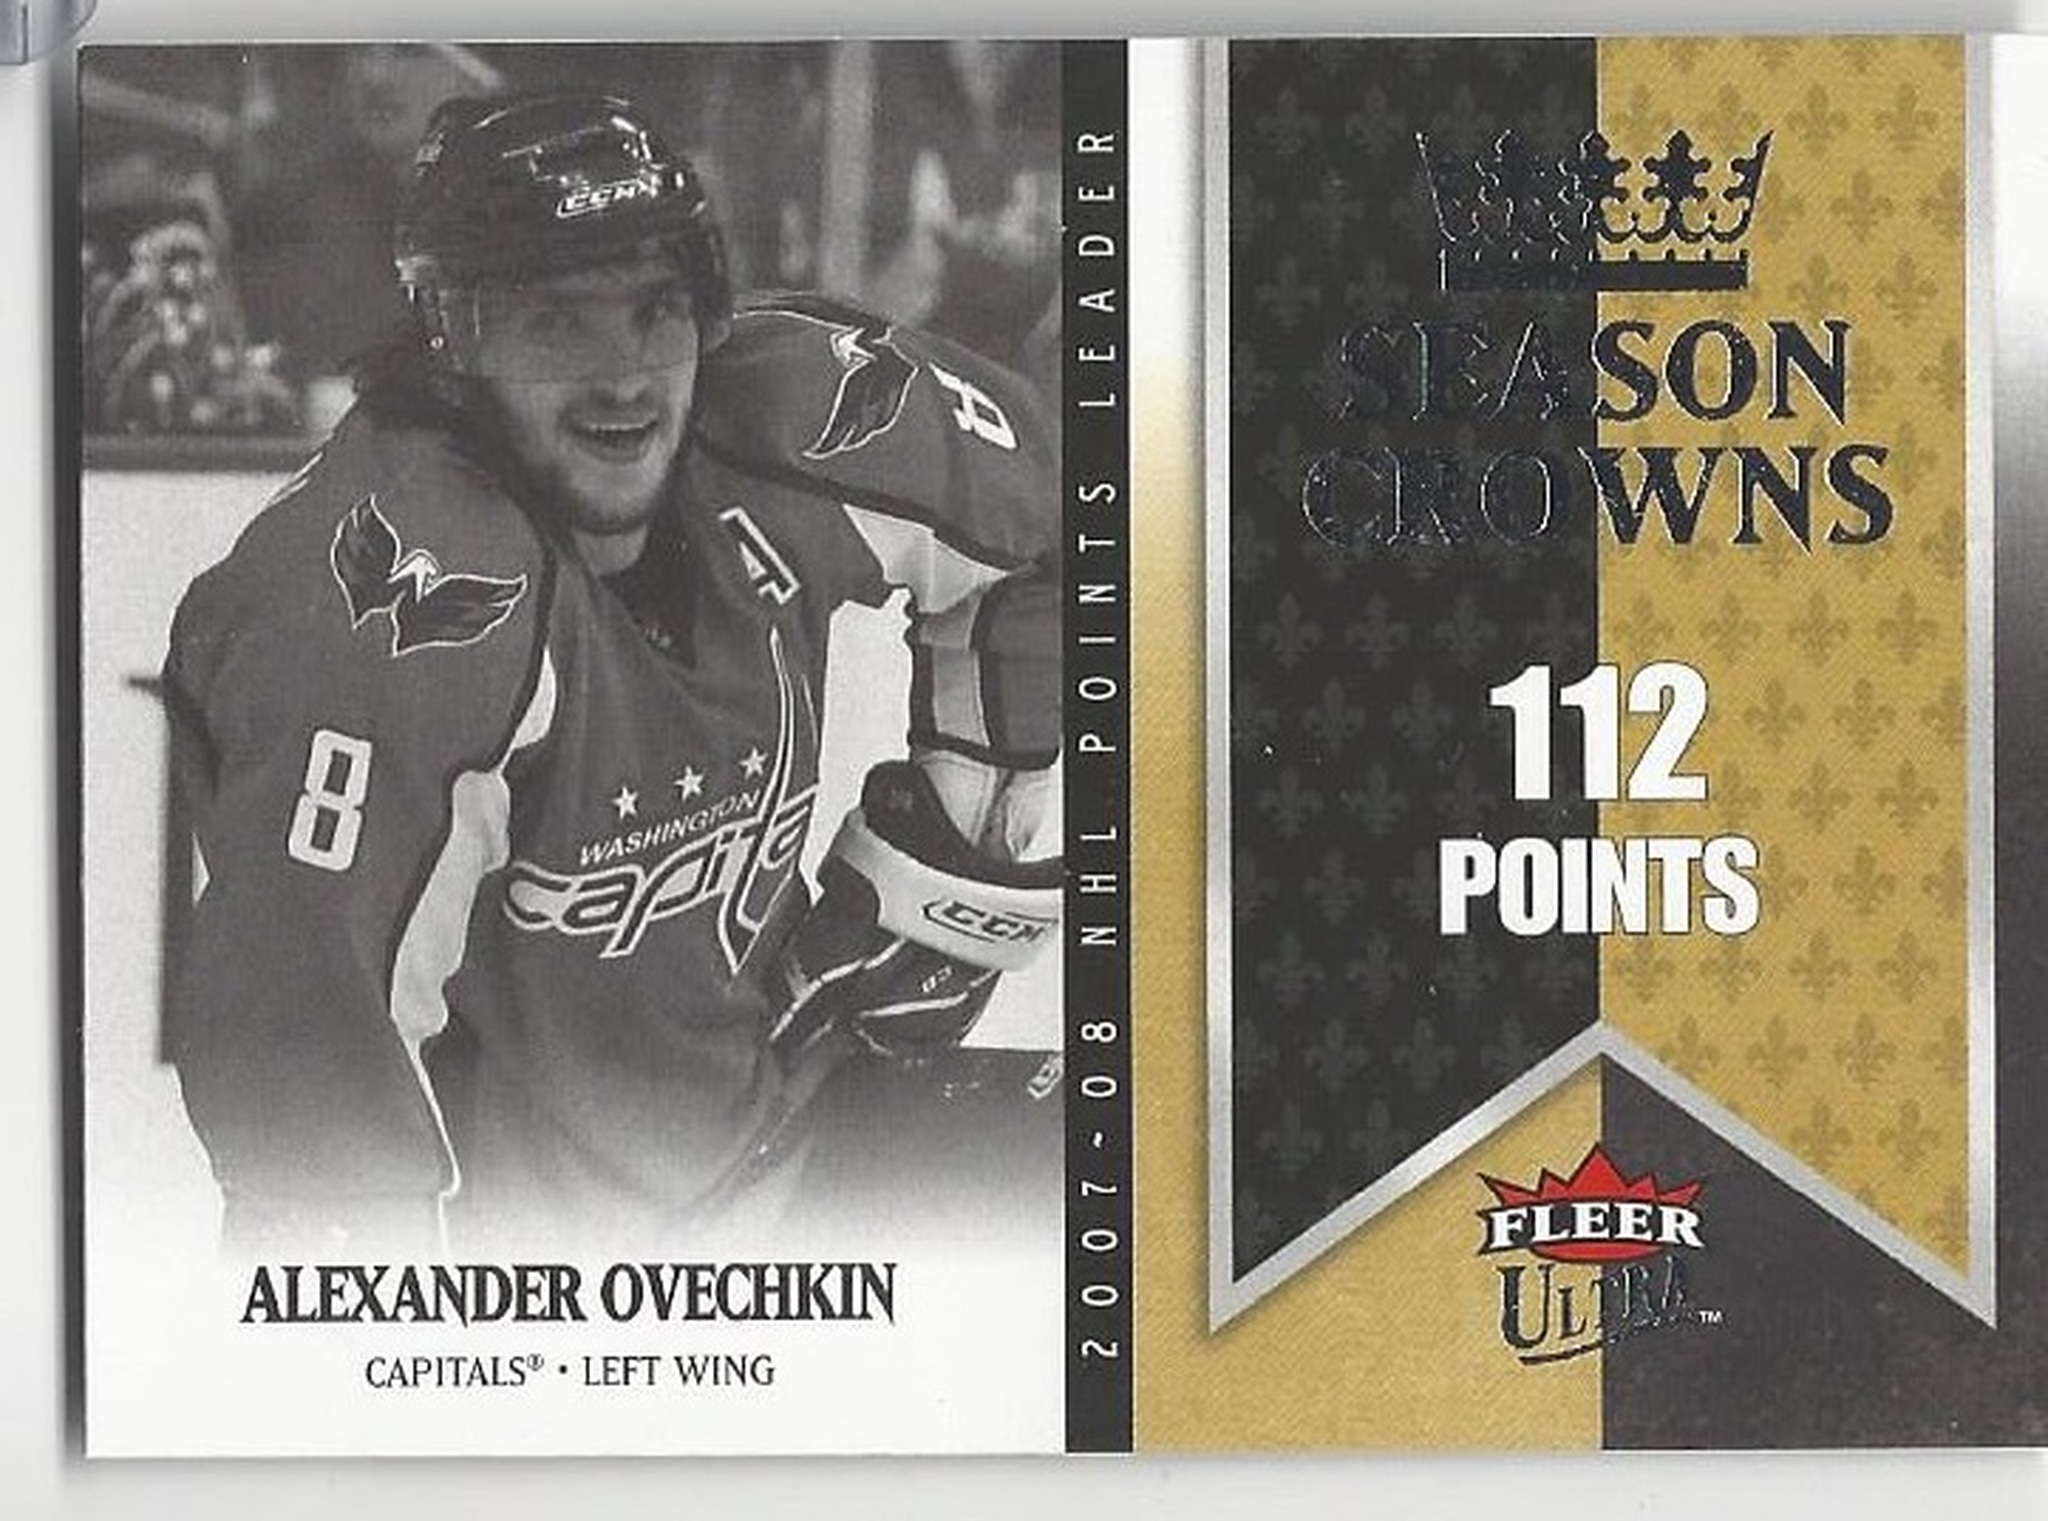 2008-09 Ultra Season Crowns #SC3 Alexander Ovechkin (30-X108-CAPITALS)